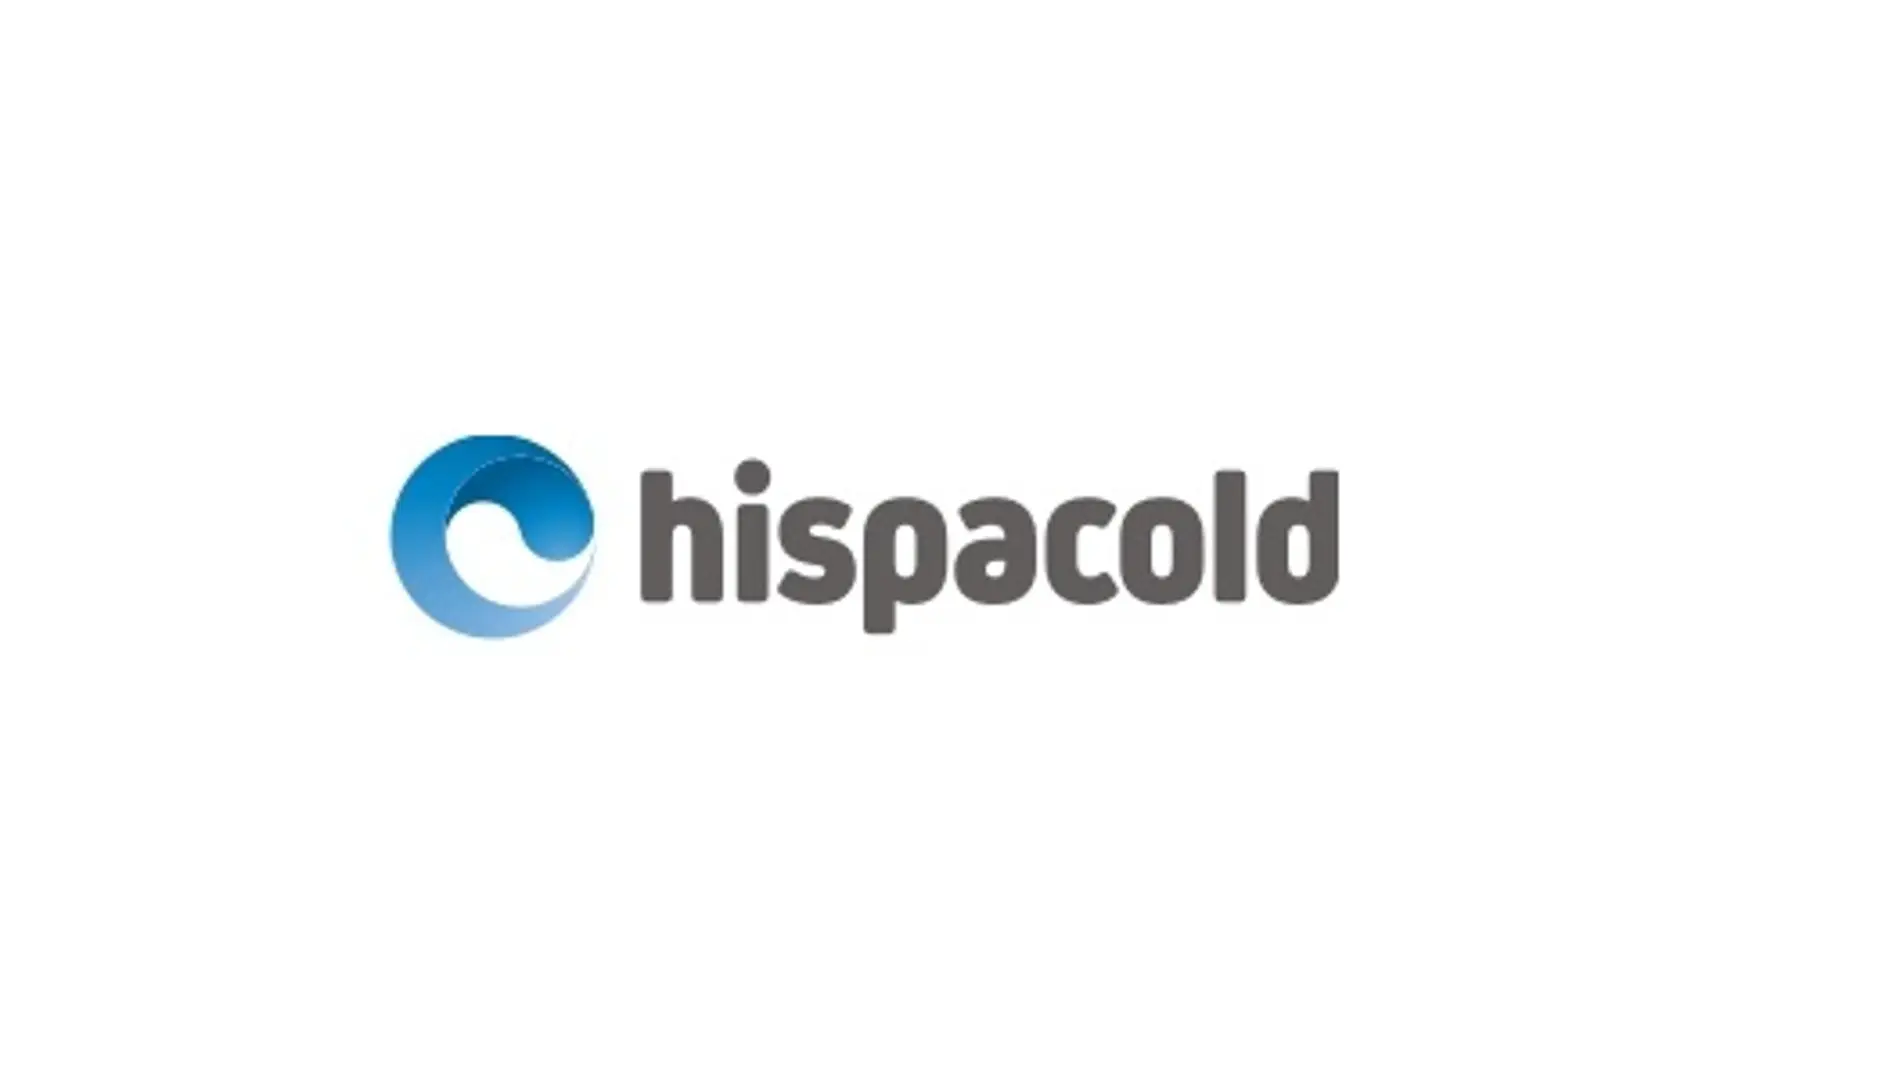 Hispacold